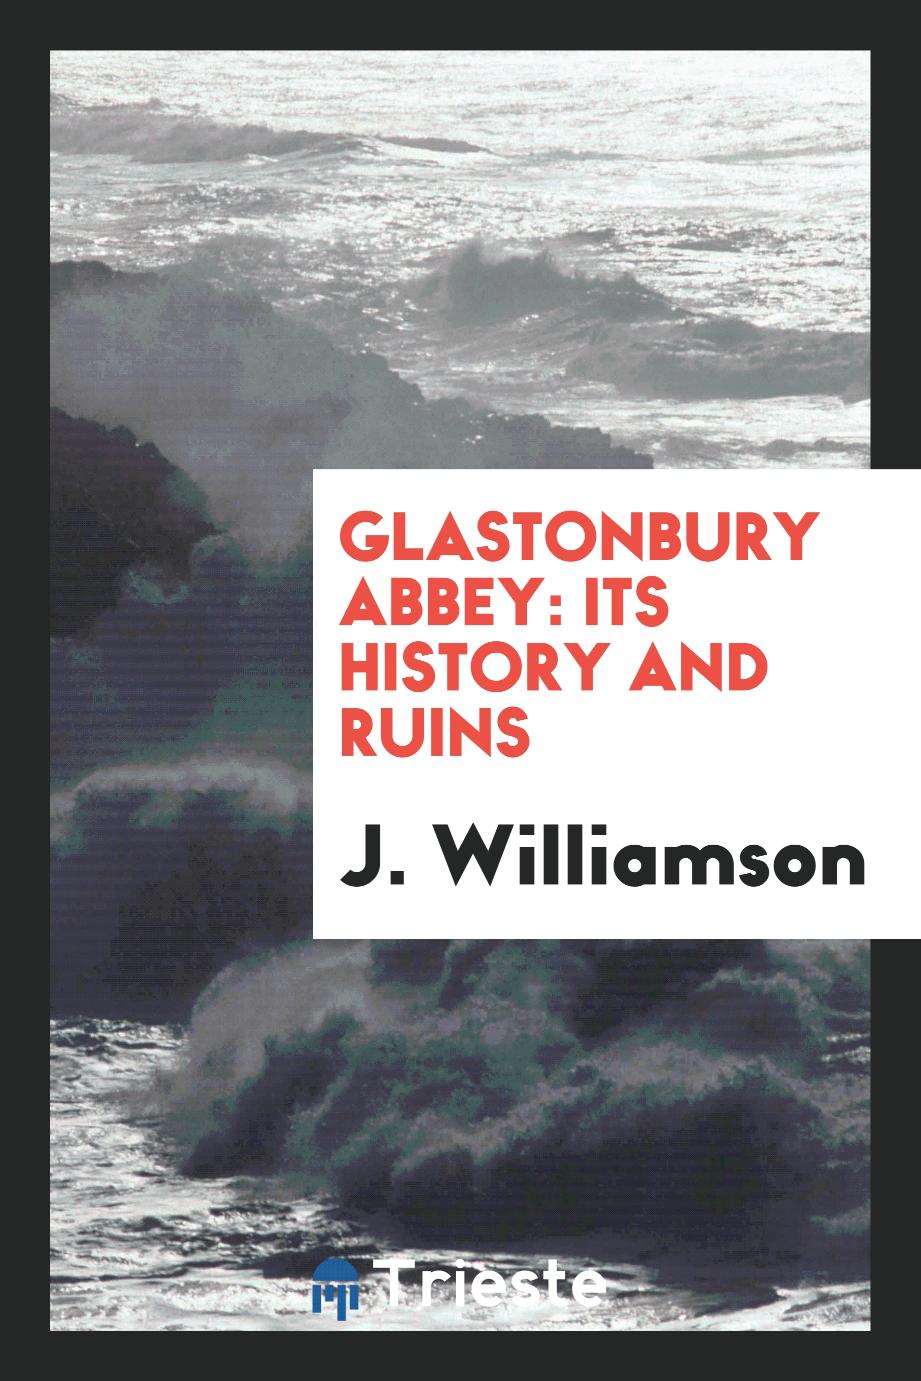 Glastonbury abbey: its history and ruins